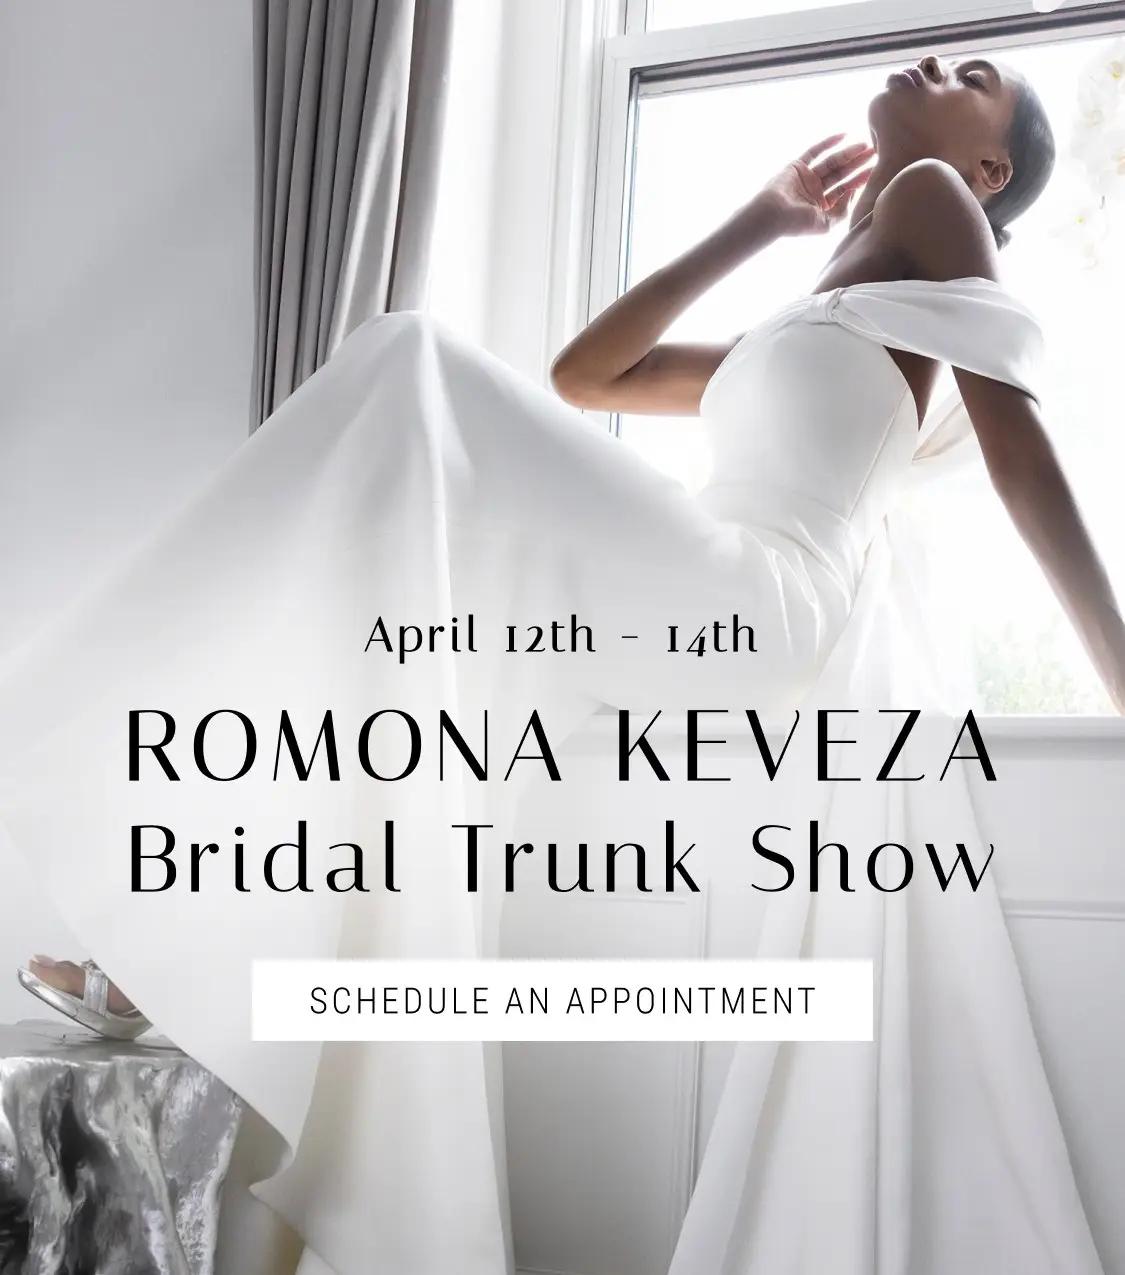 Romona Keveza Bridal Trunk Show Banner Mobile